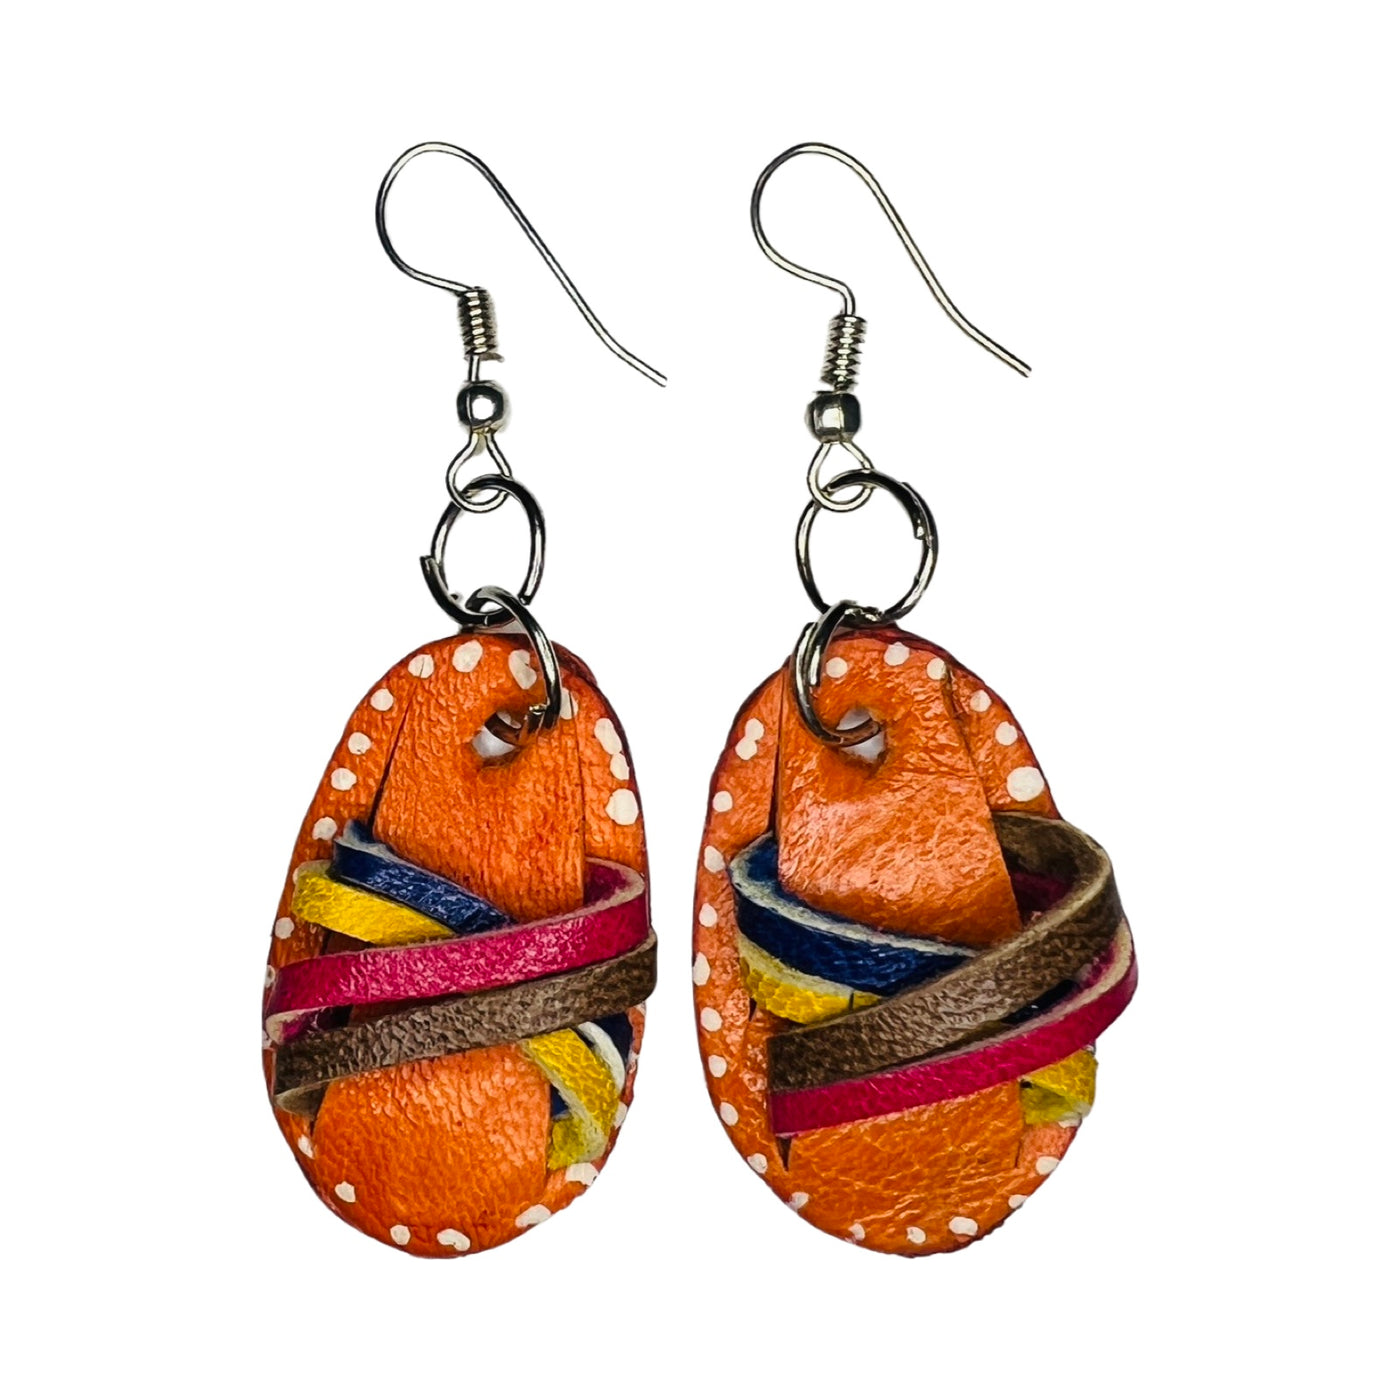 A set of multi-color leather huaraches (Sandal) earrings.